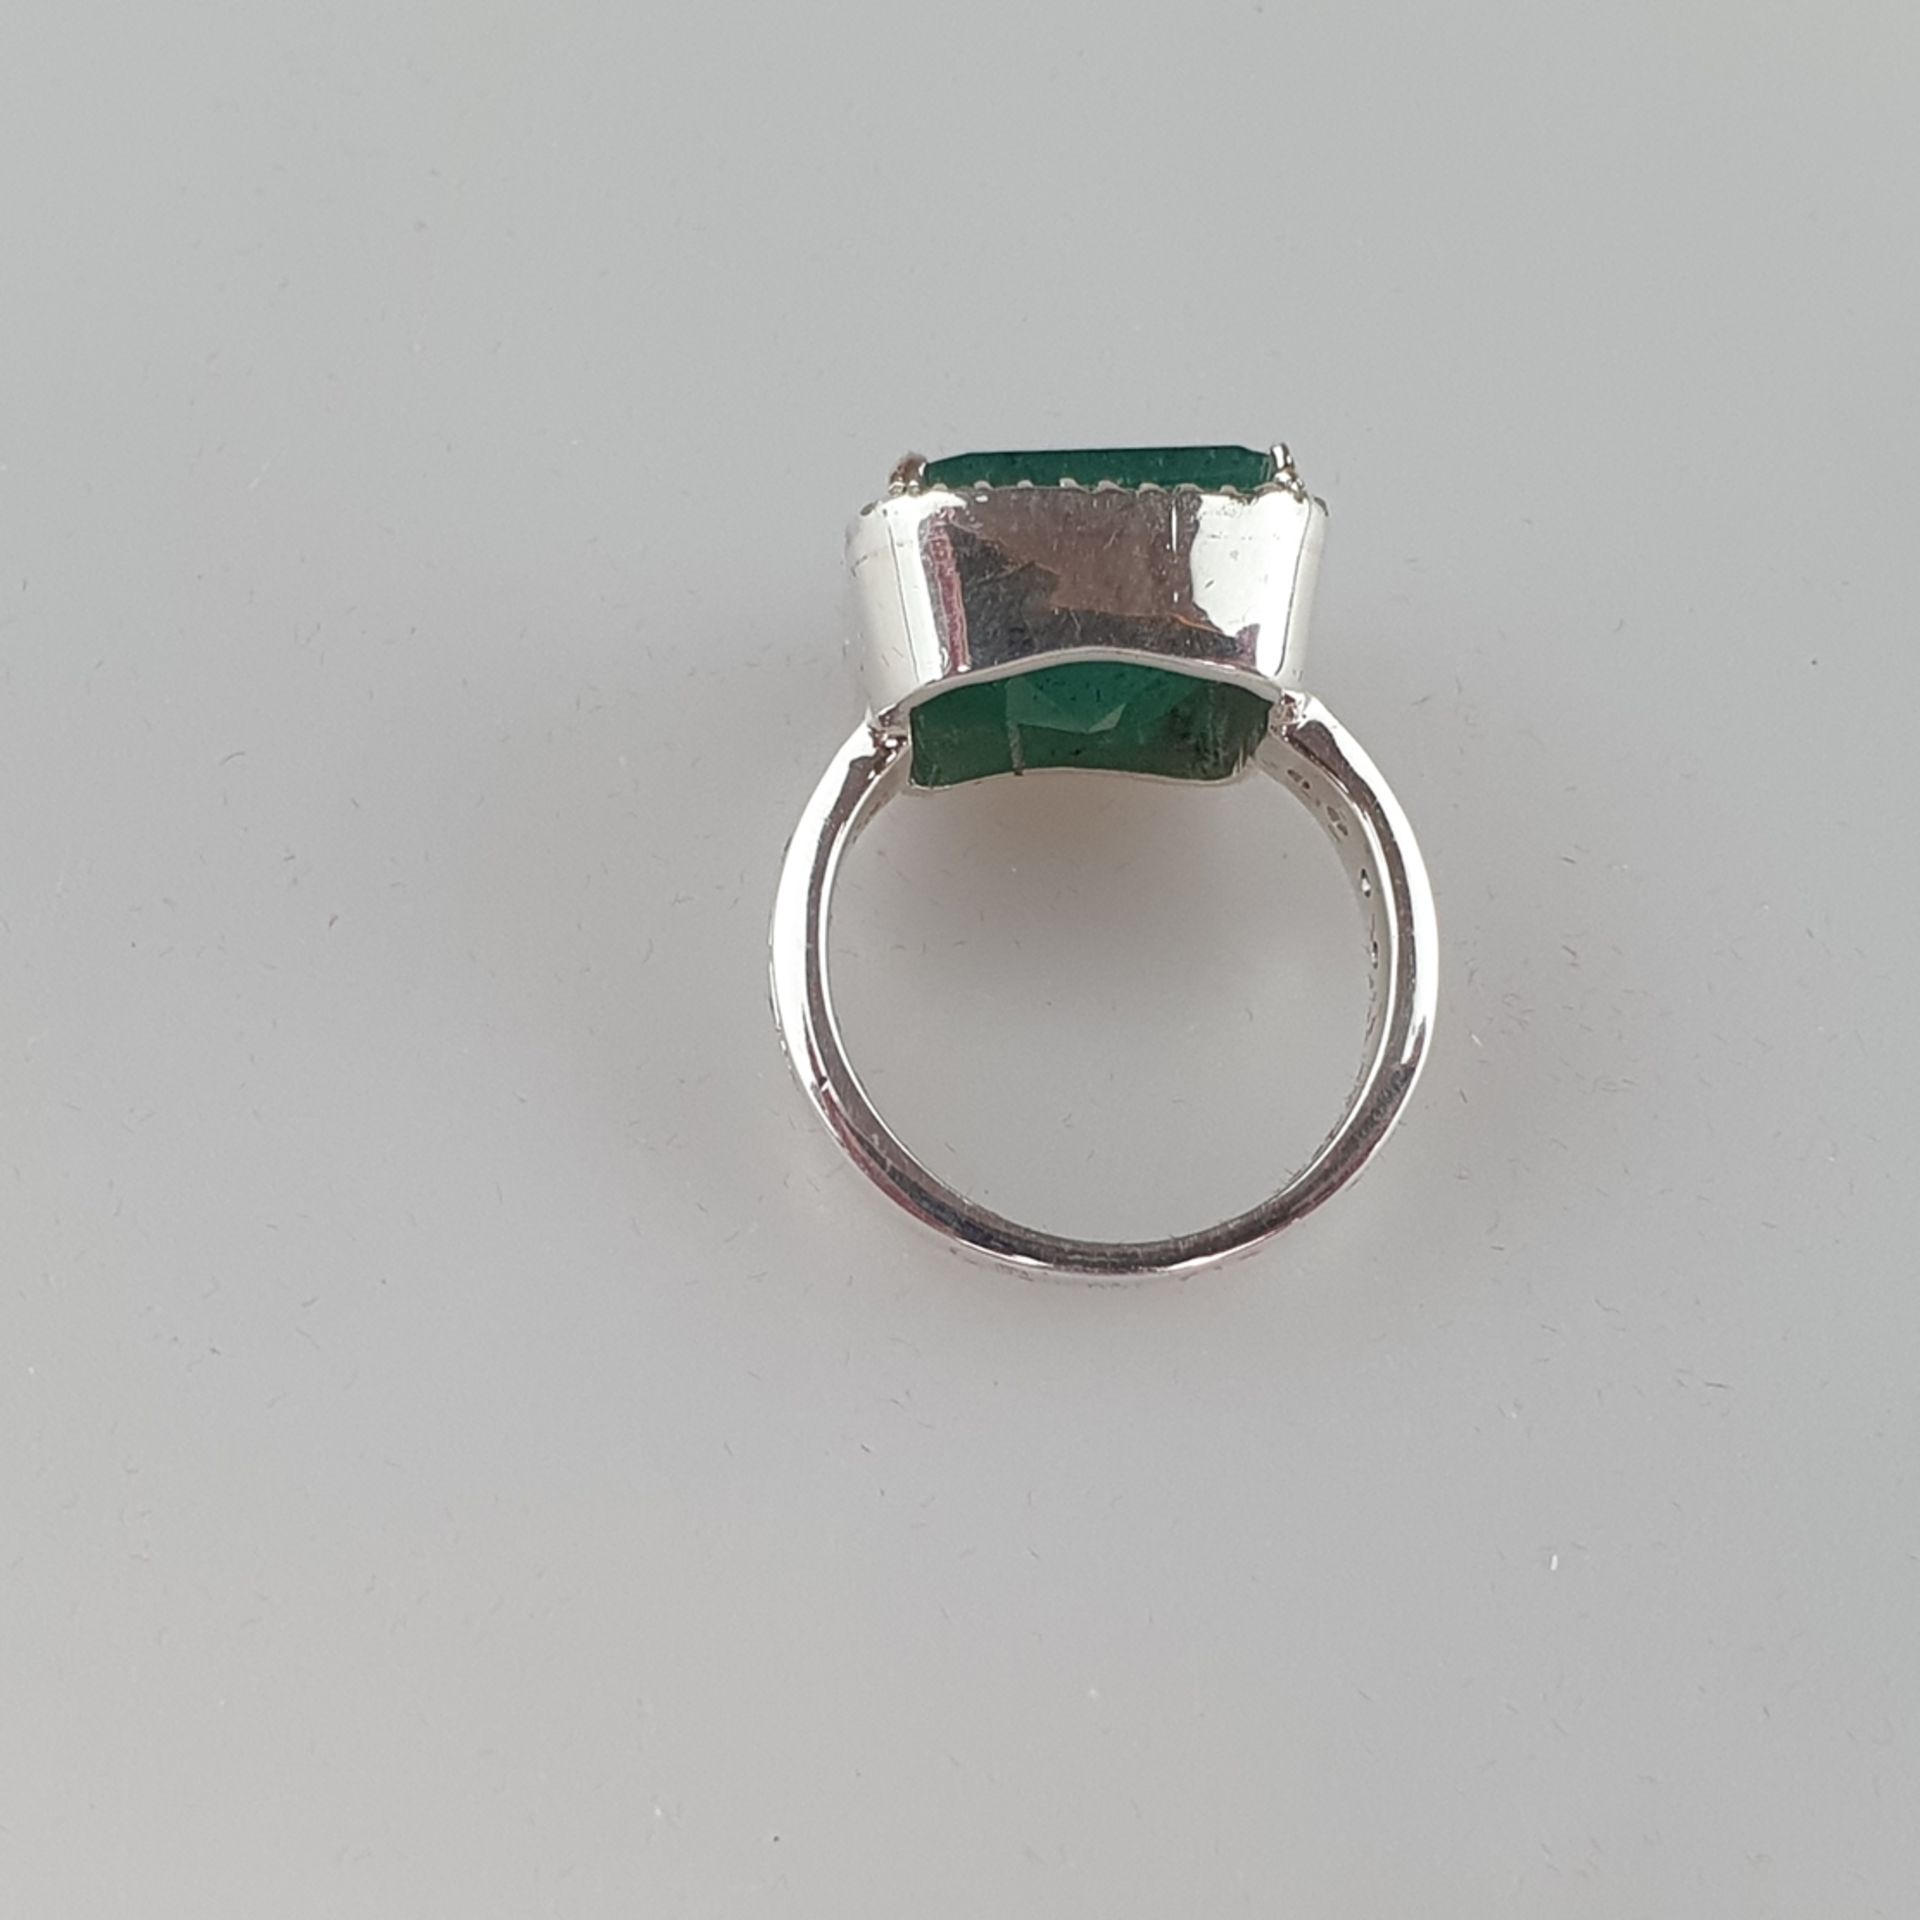 Silberring mit Smaragd - Sterling Silber, gestempelt, rechteckiger Ringkopf besetzt mit Smaragd im - Image 6 of 9